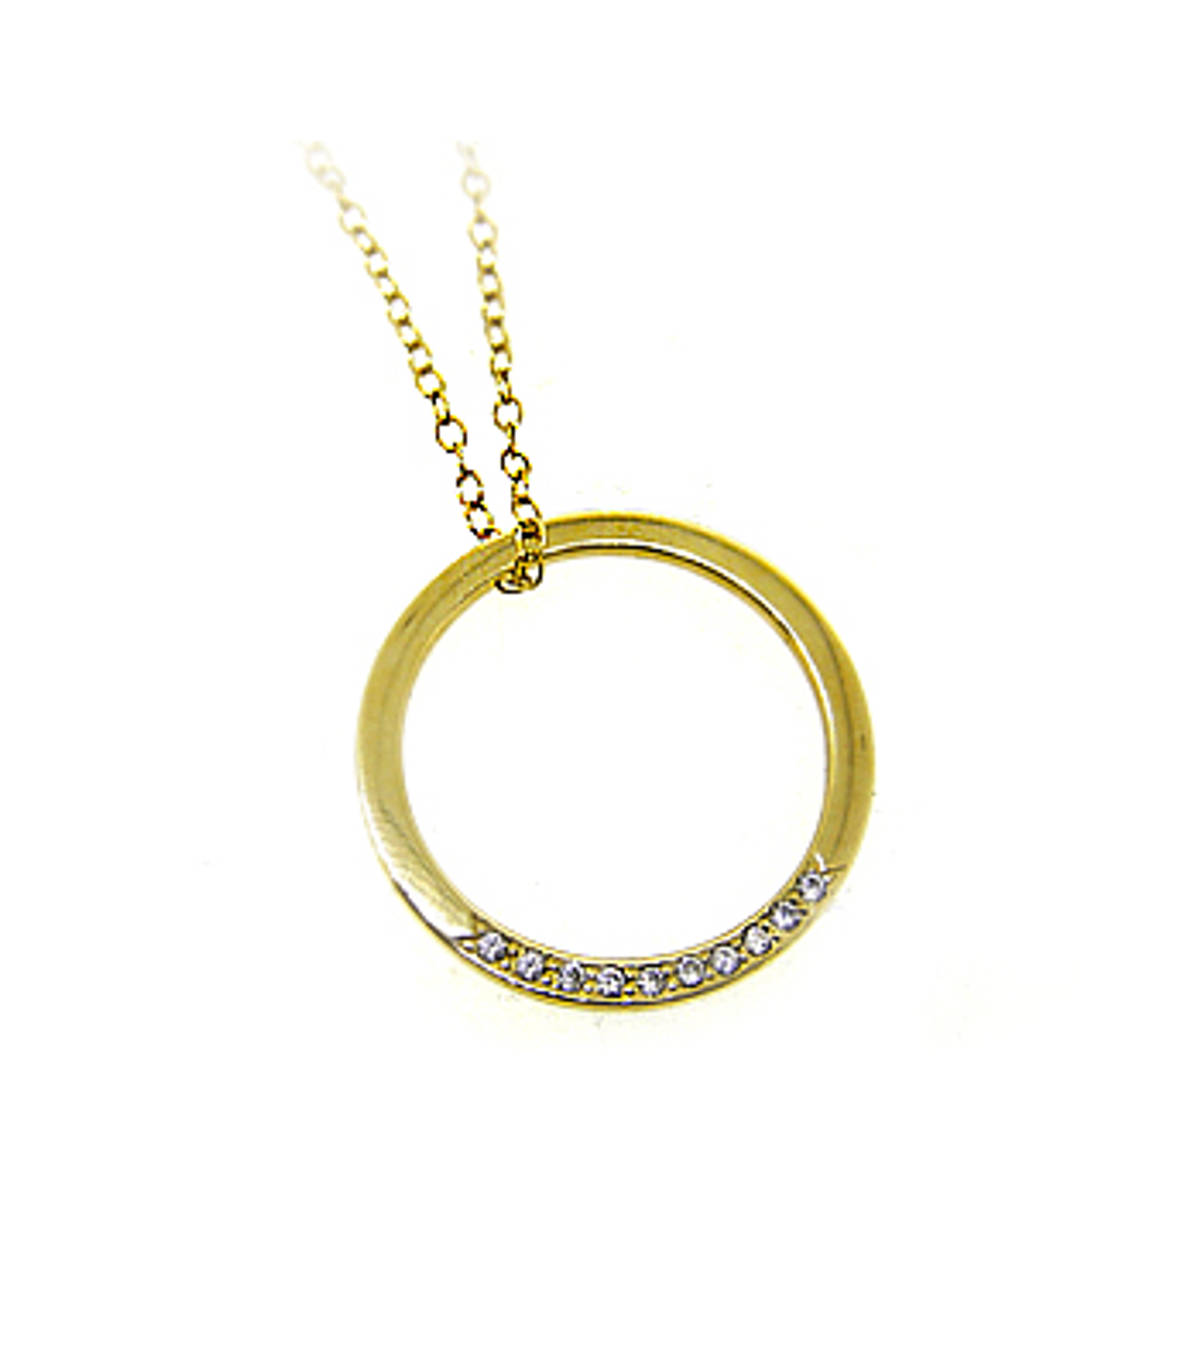 9k yellow gold CZ circle pendant on 9k yellow gold 18” chain
Metal: 9k yellow gold  9k yellow gold 18” chain
Length  2.1cm  Width  2.1cm      Made in  Ireland